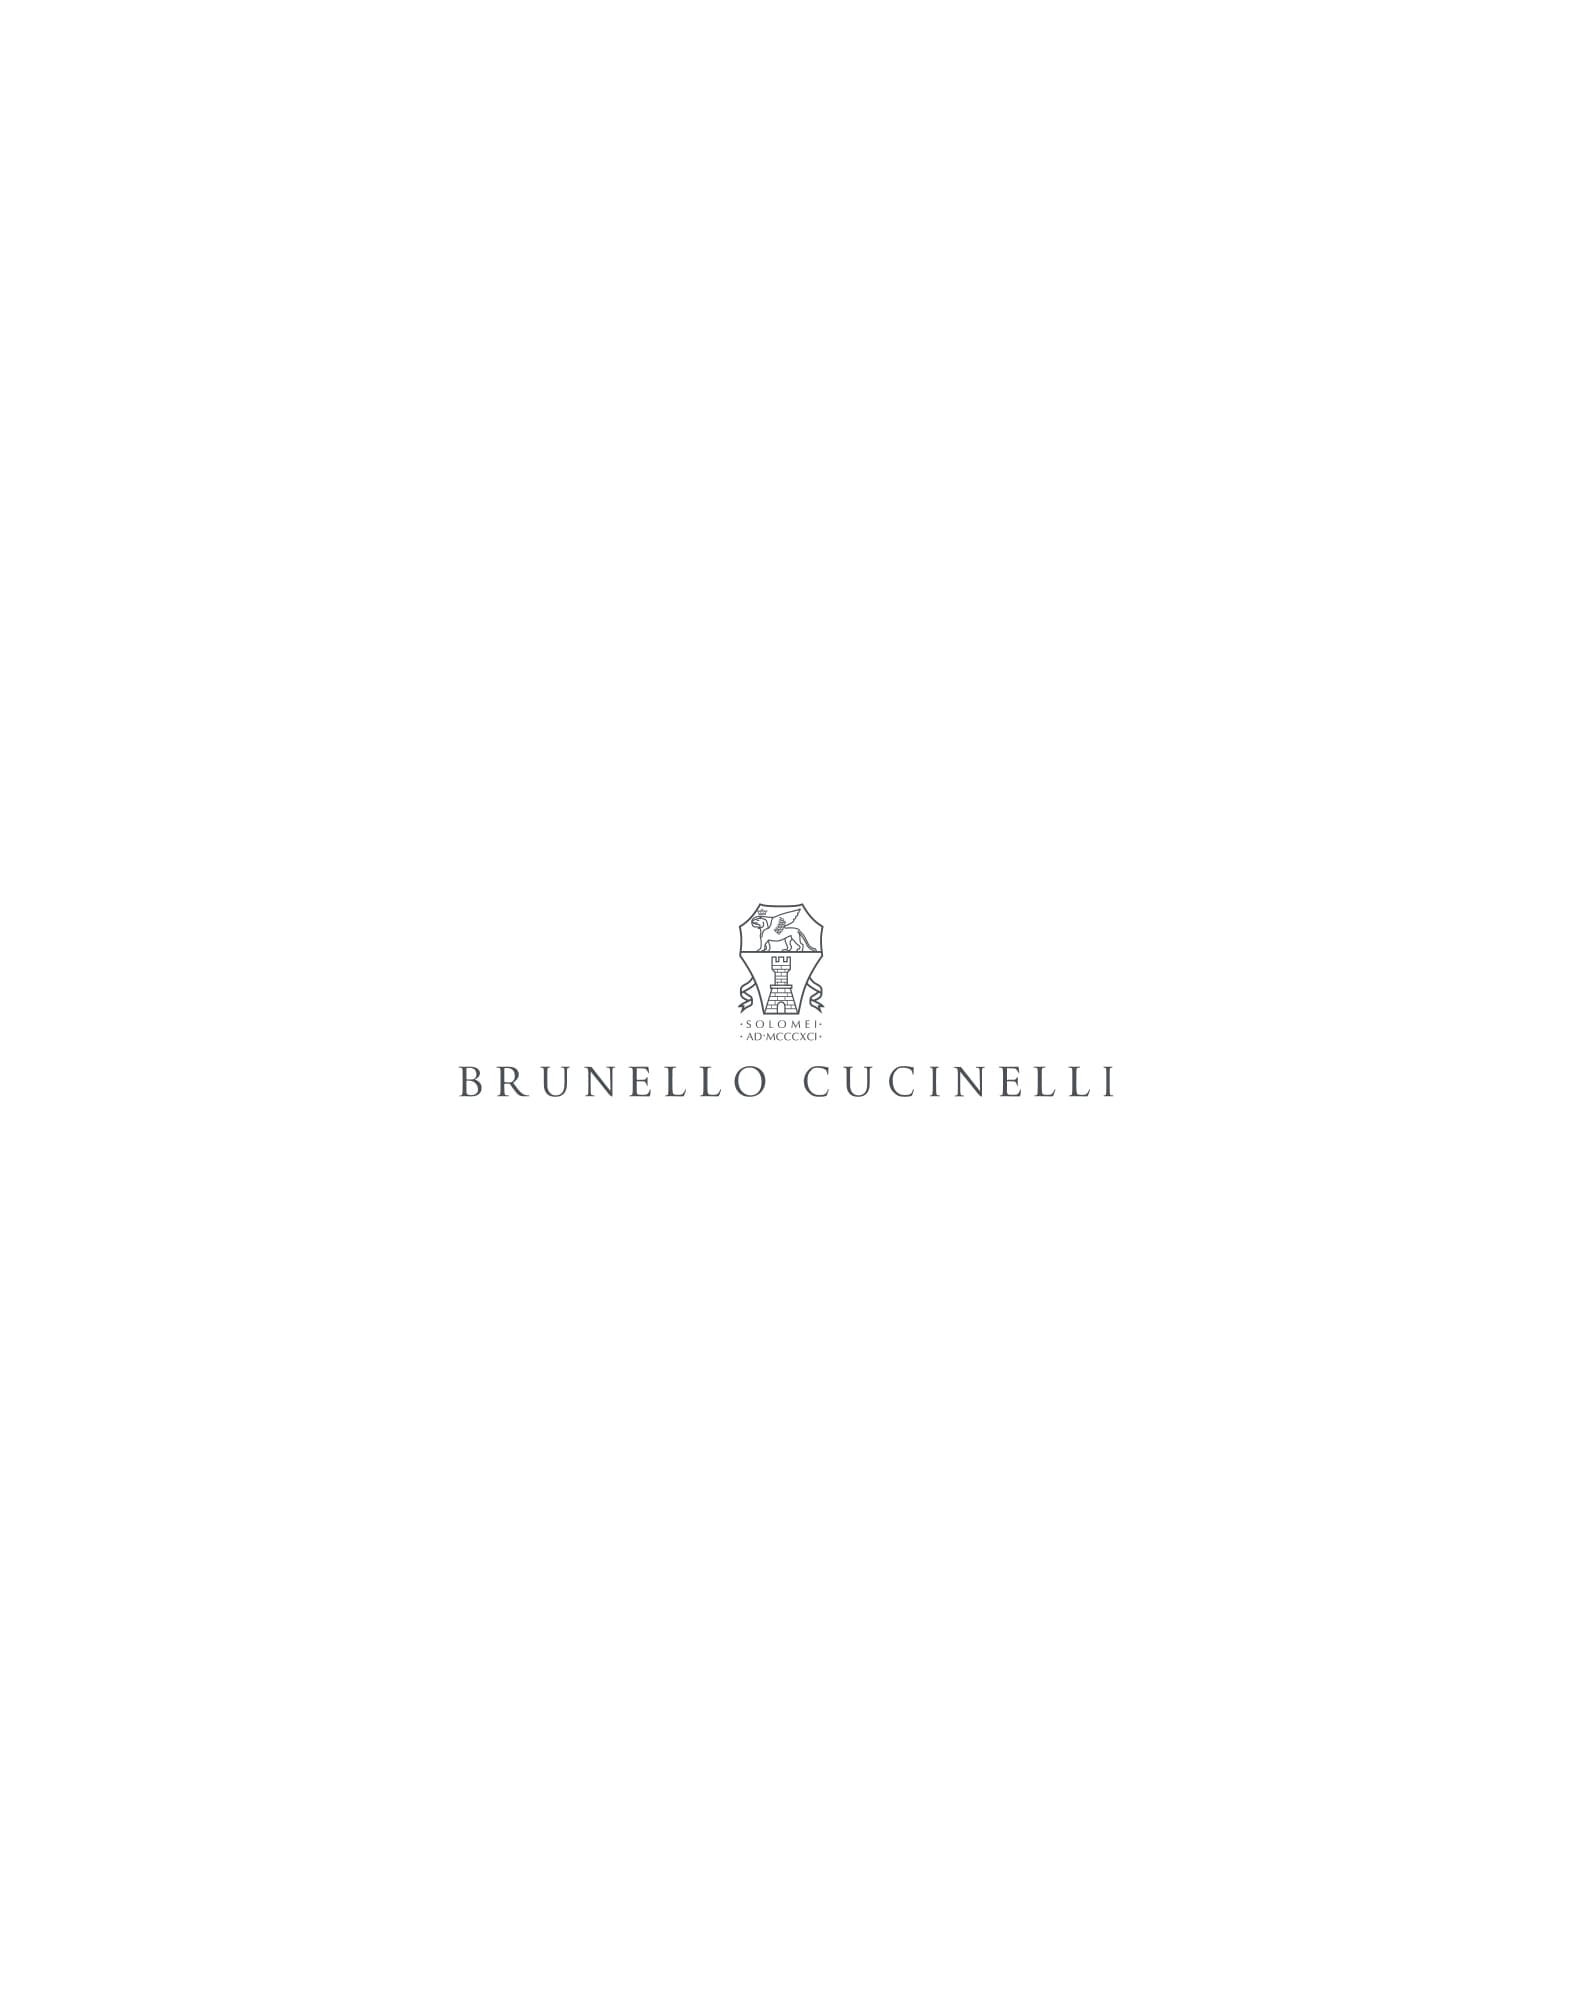 Bermuda shorts with pleats Black Man - Brunello Cucinelli